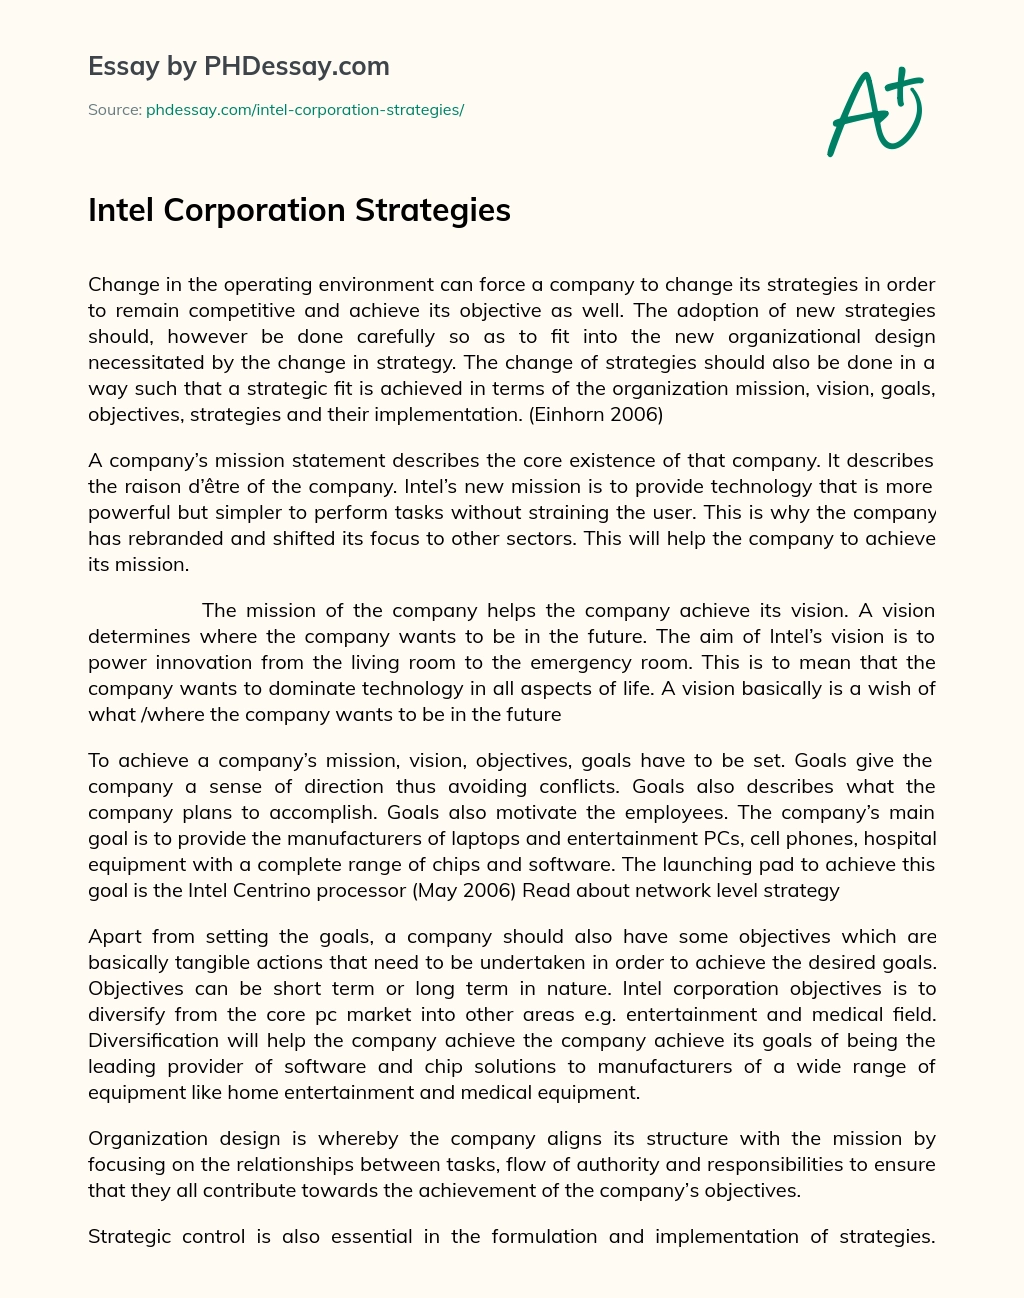 Intel Corporation Strategies essay